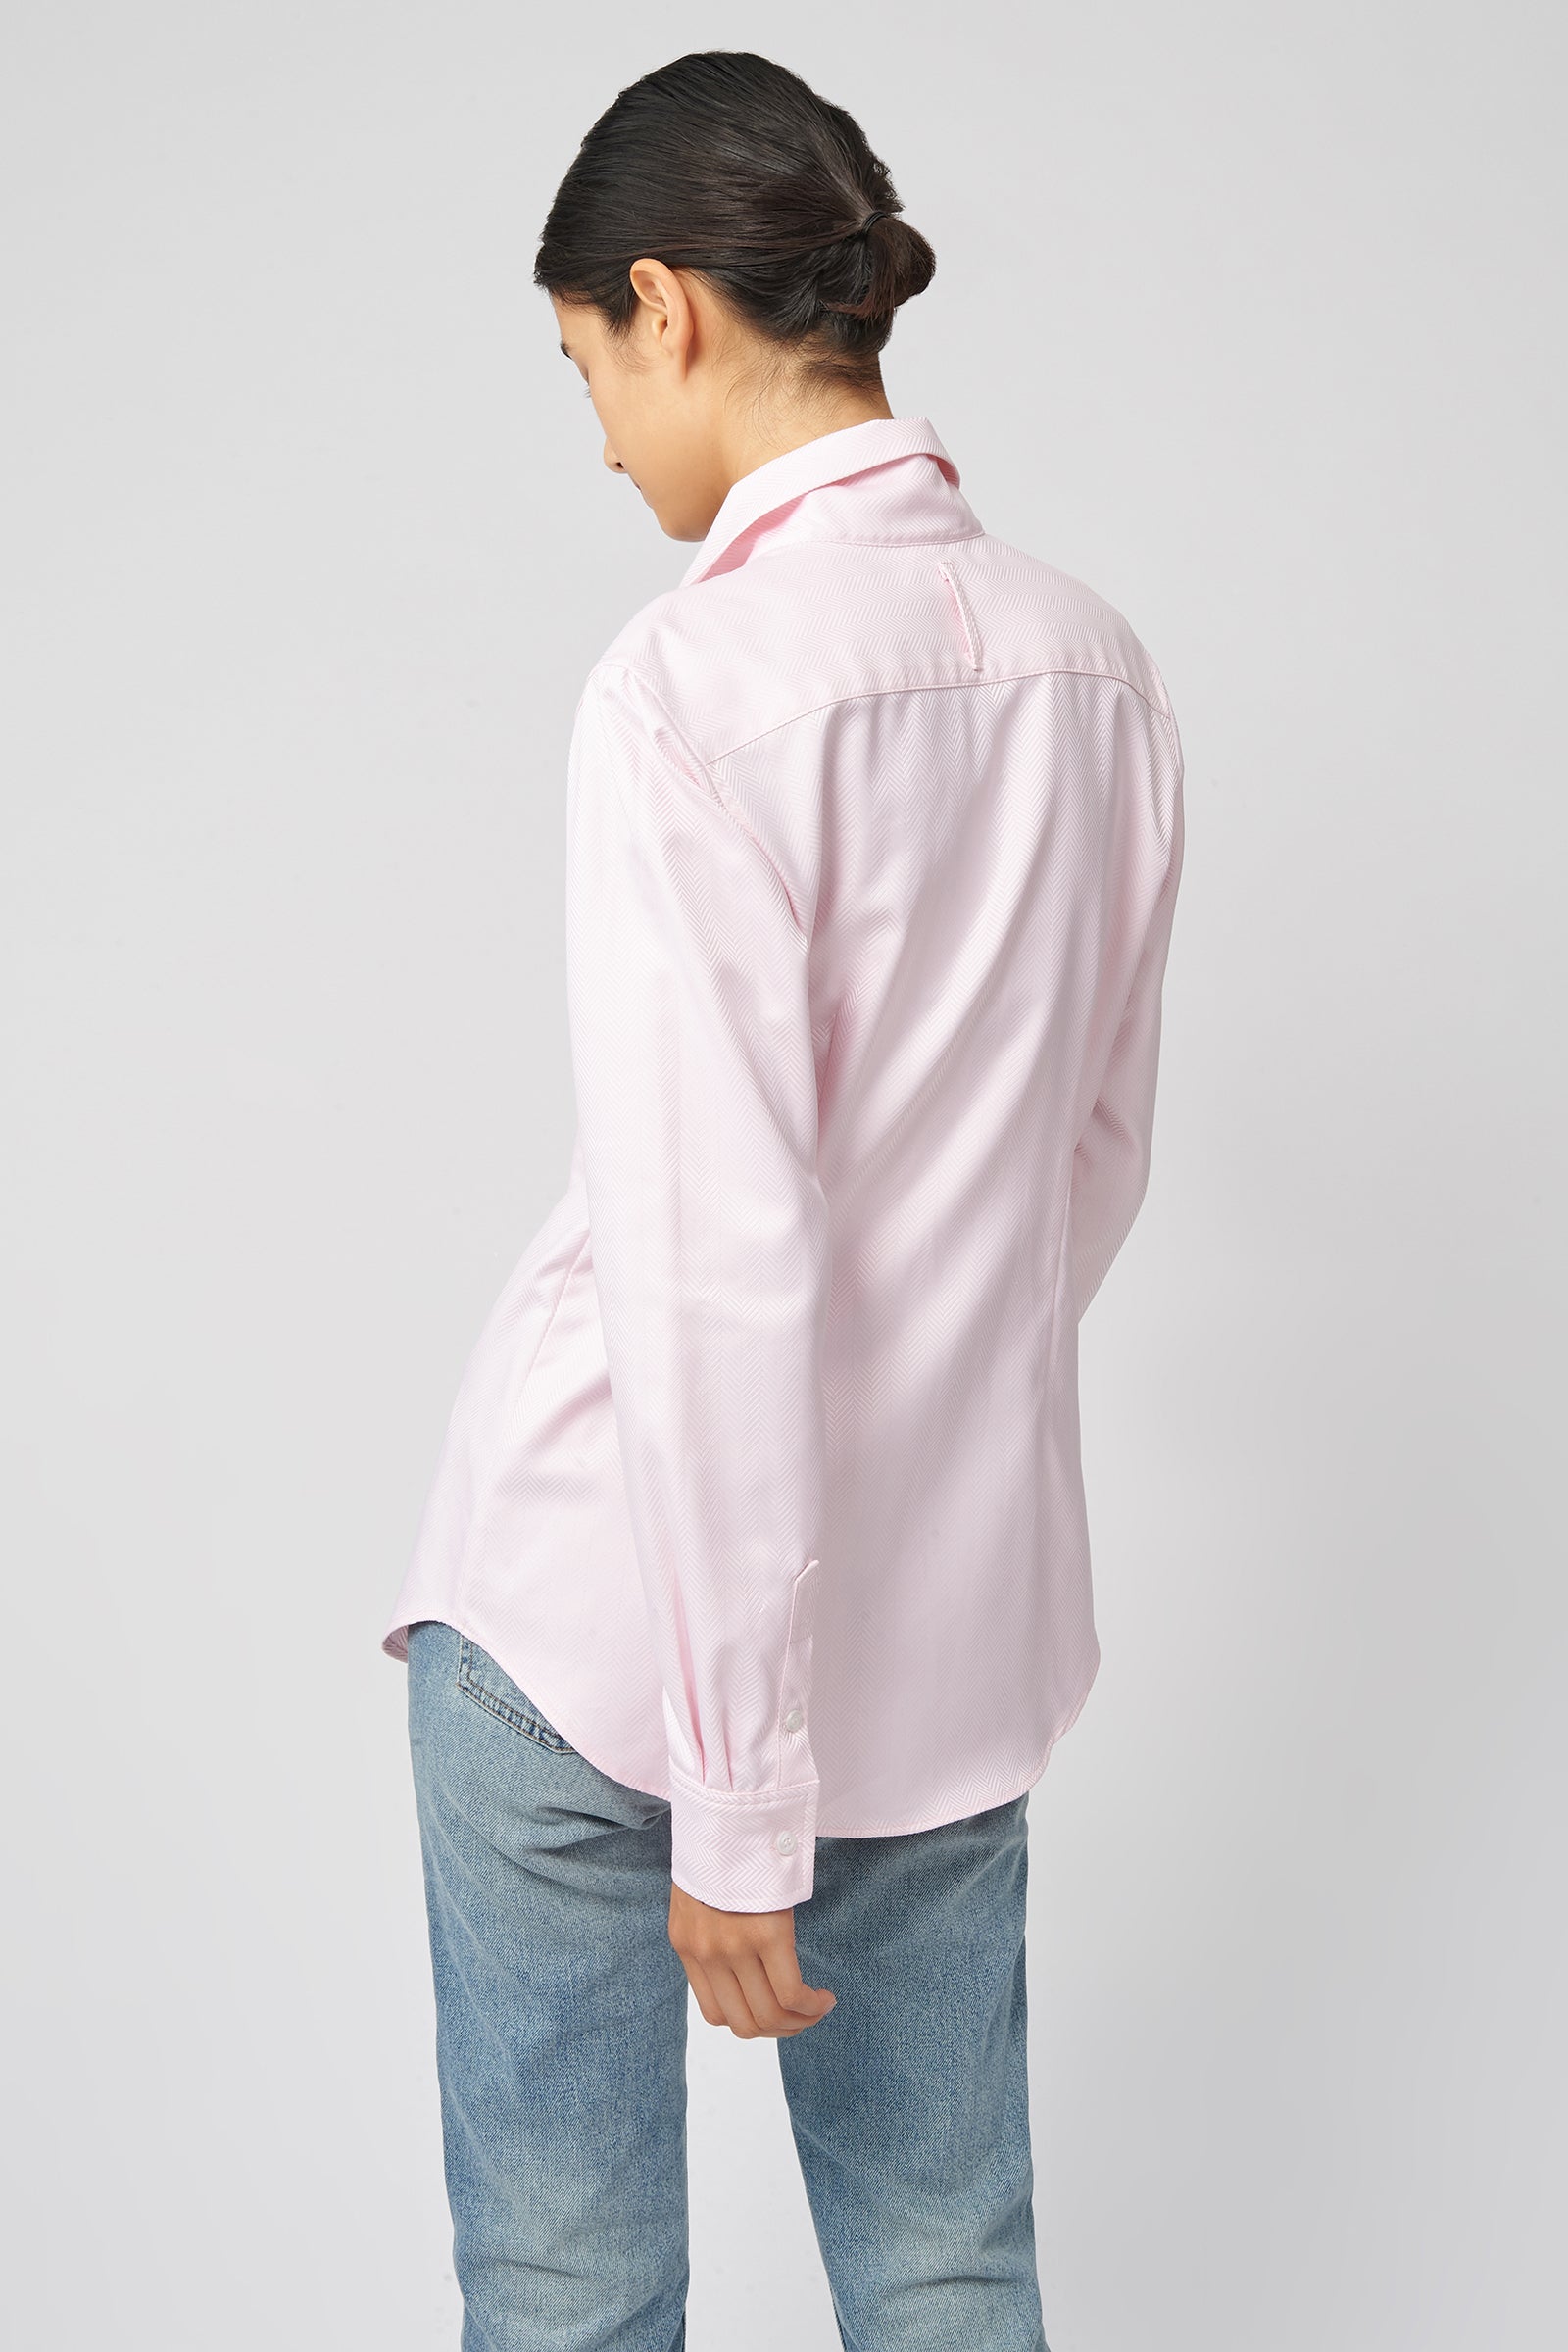 Kal Rieman Ginna Tailored Shirt in Pink Herringbone on Model Front Side View